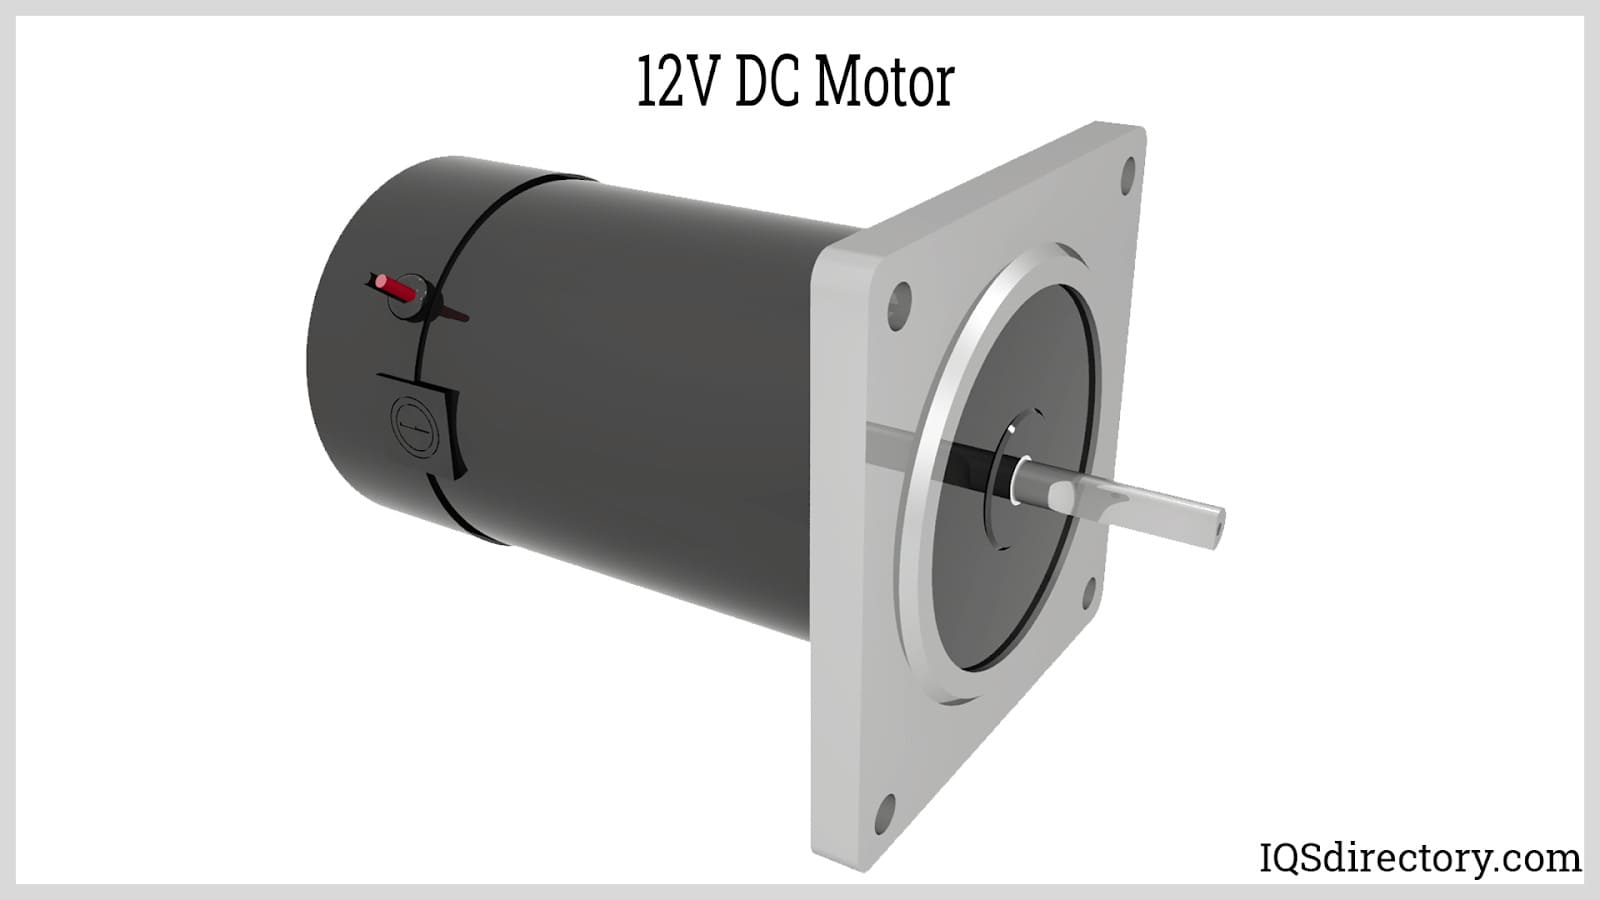 12V DC Motor